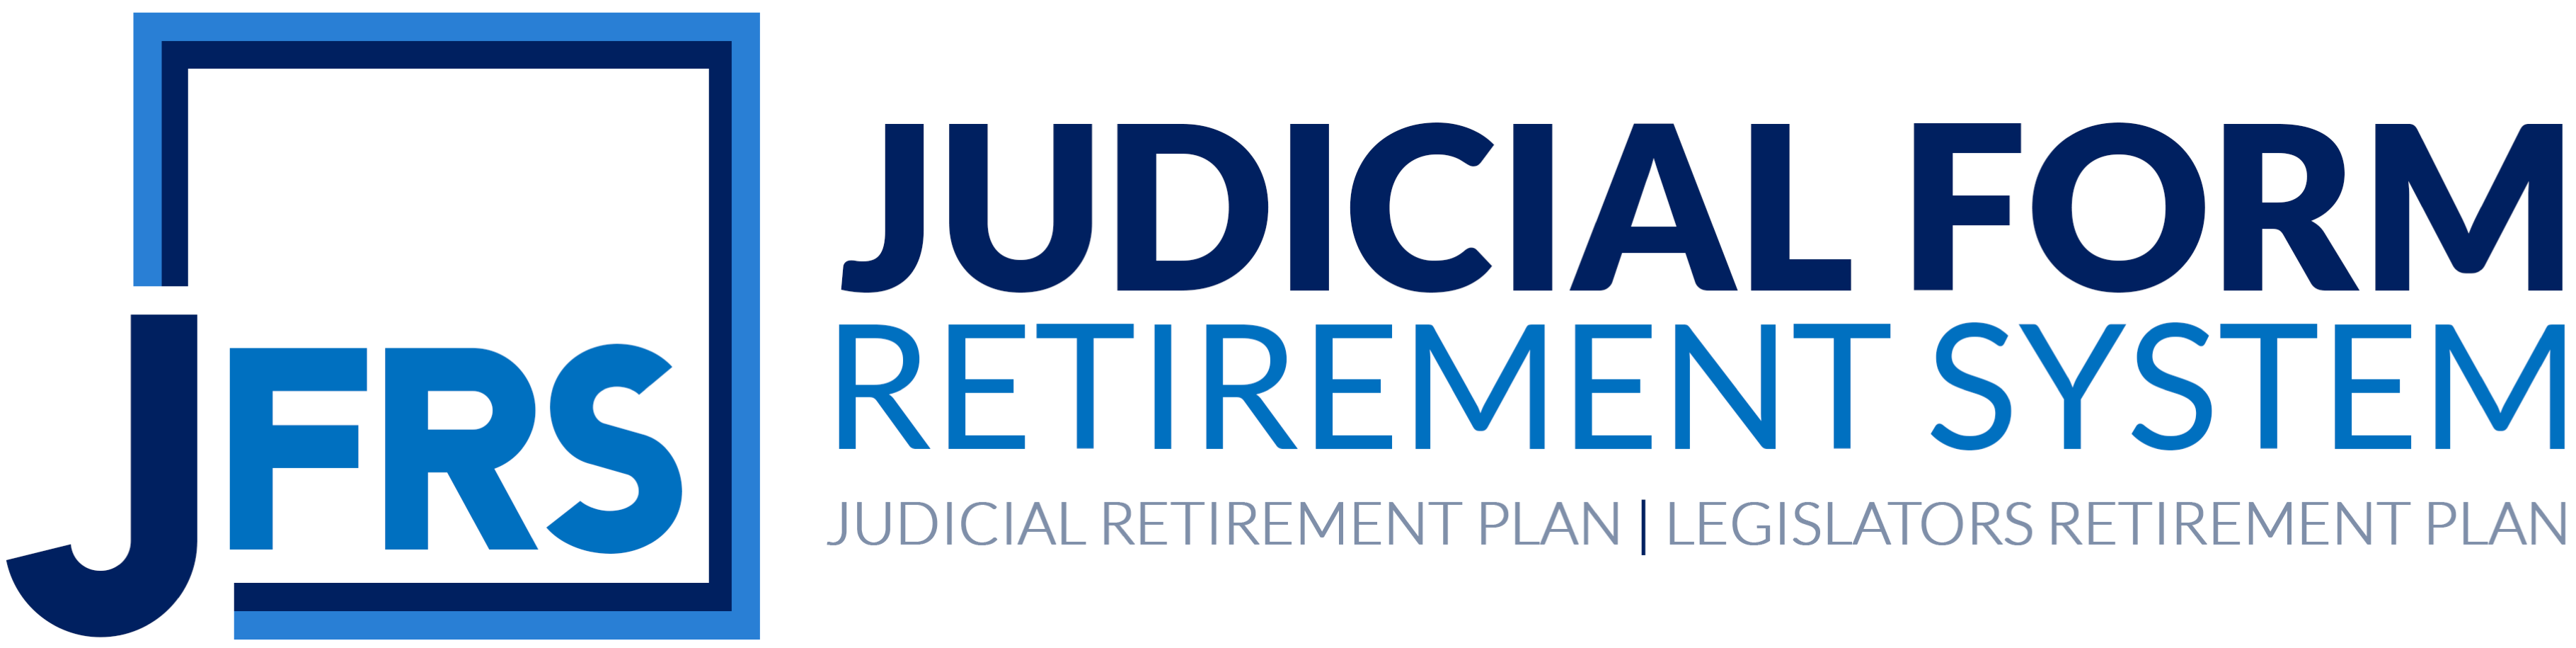 JFRS - Kentucky Judical Form Retirement System - Judical Retirement Plan | Legislators Retirement Plan